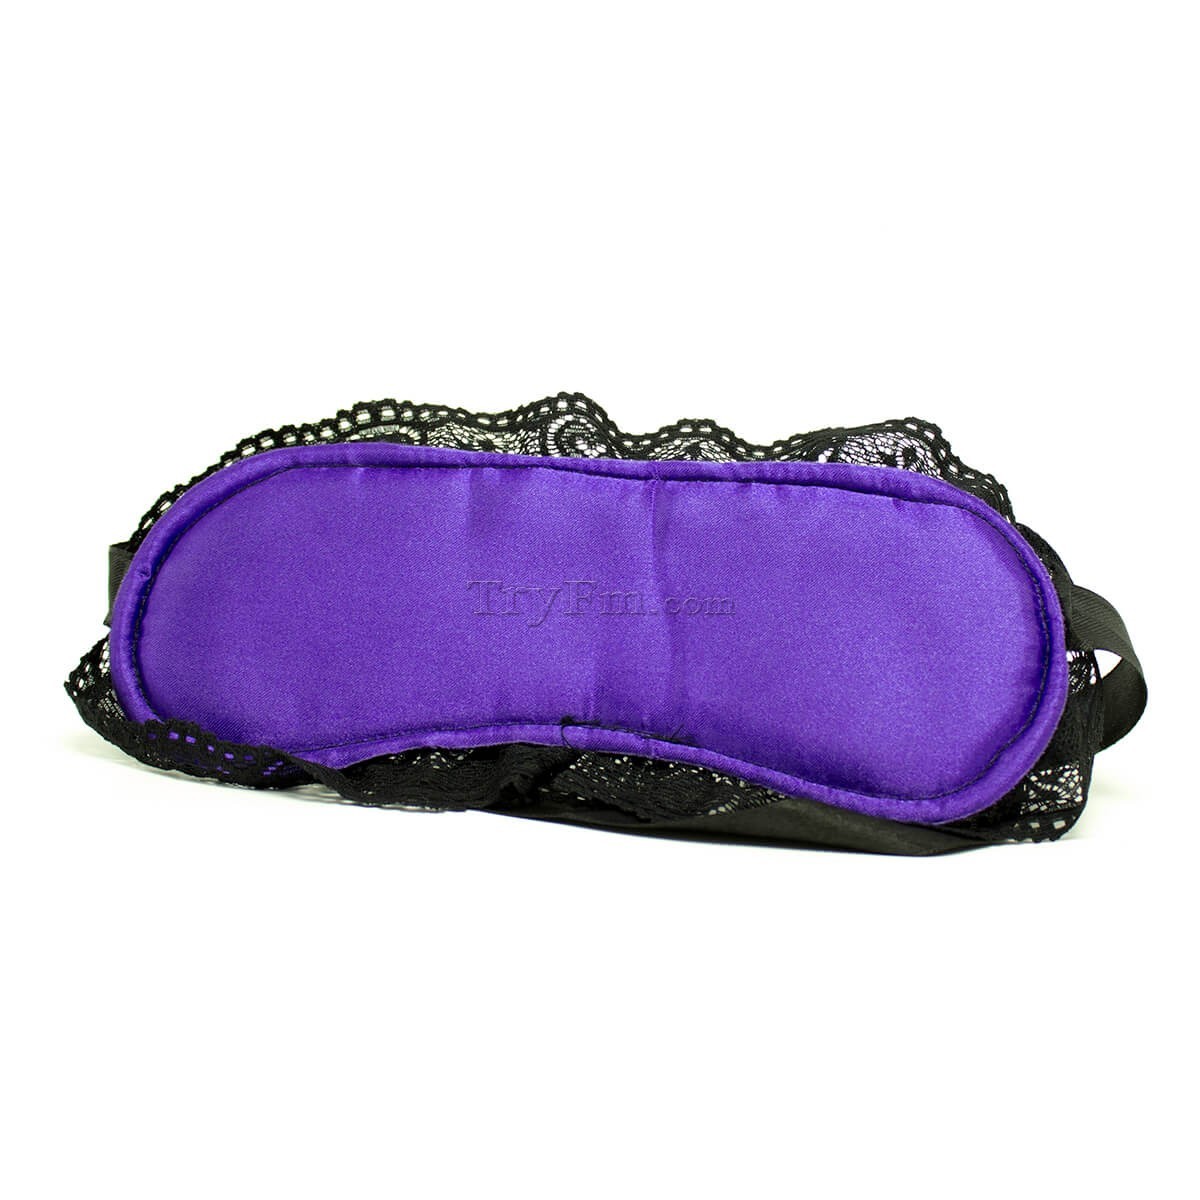 2-lace-blindfold-handcuffs-set-purple13.jpg